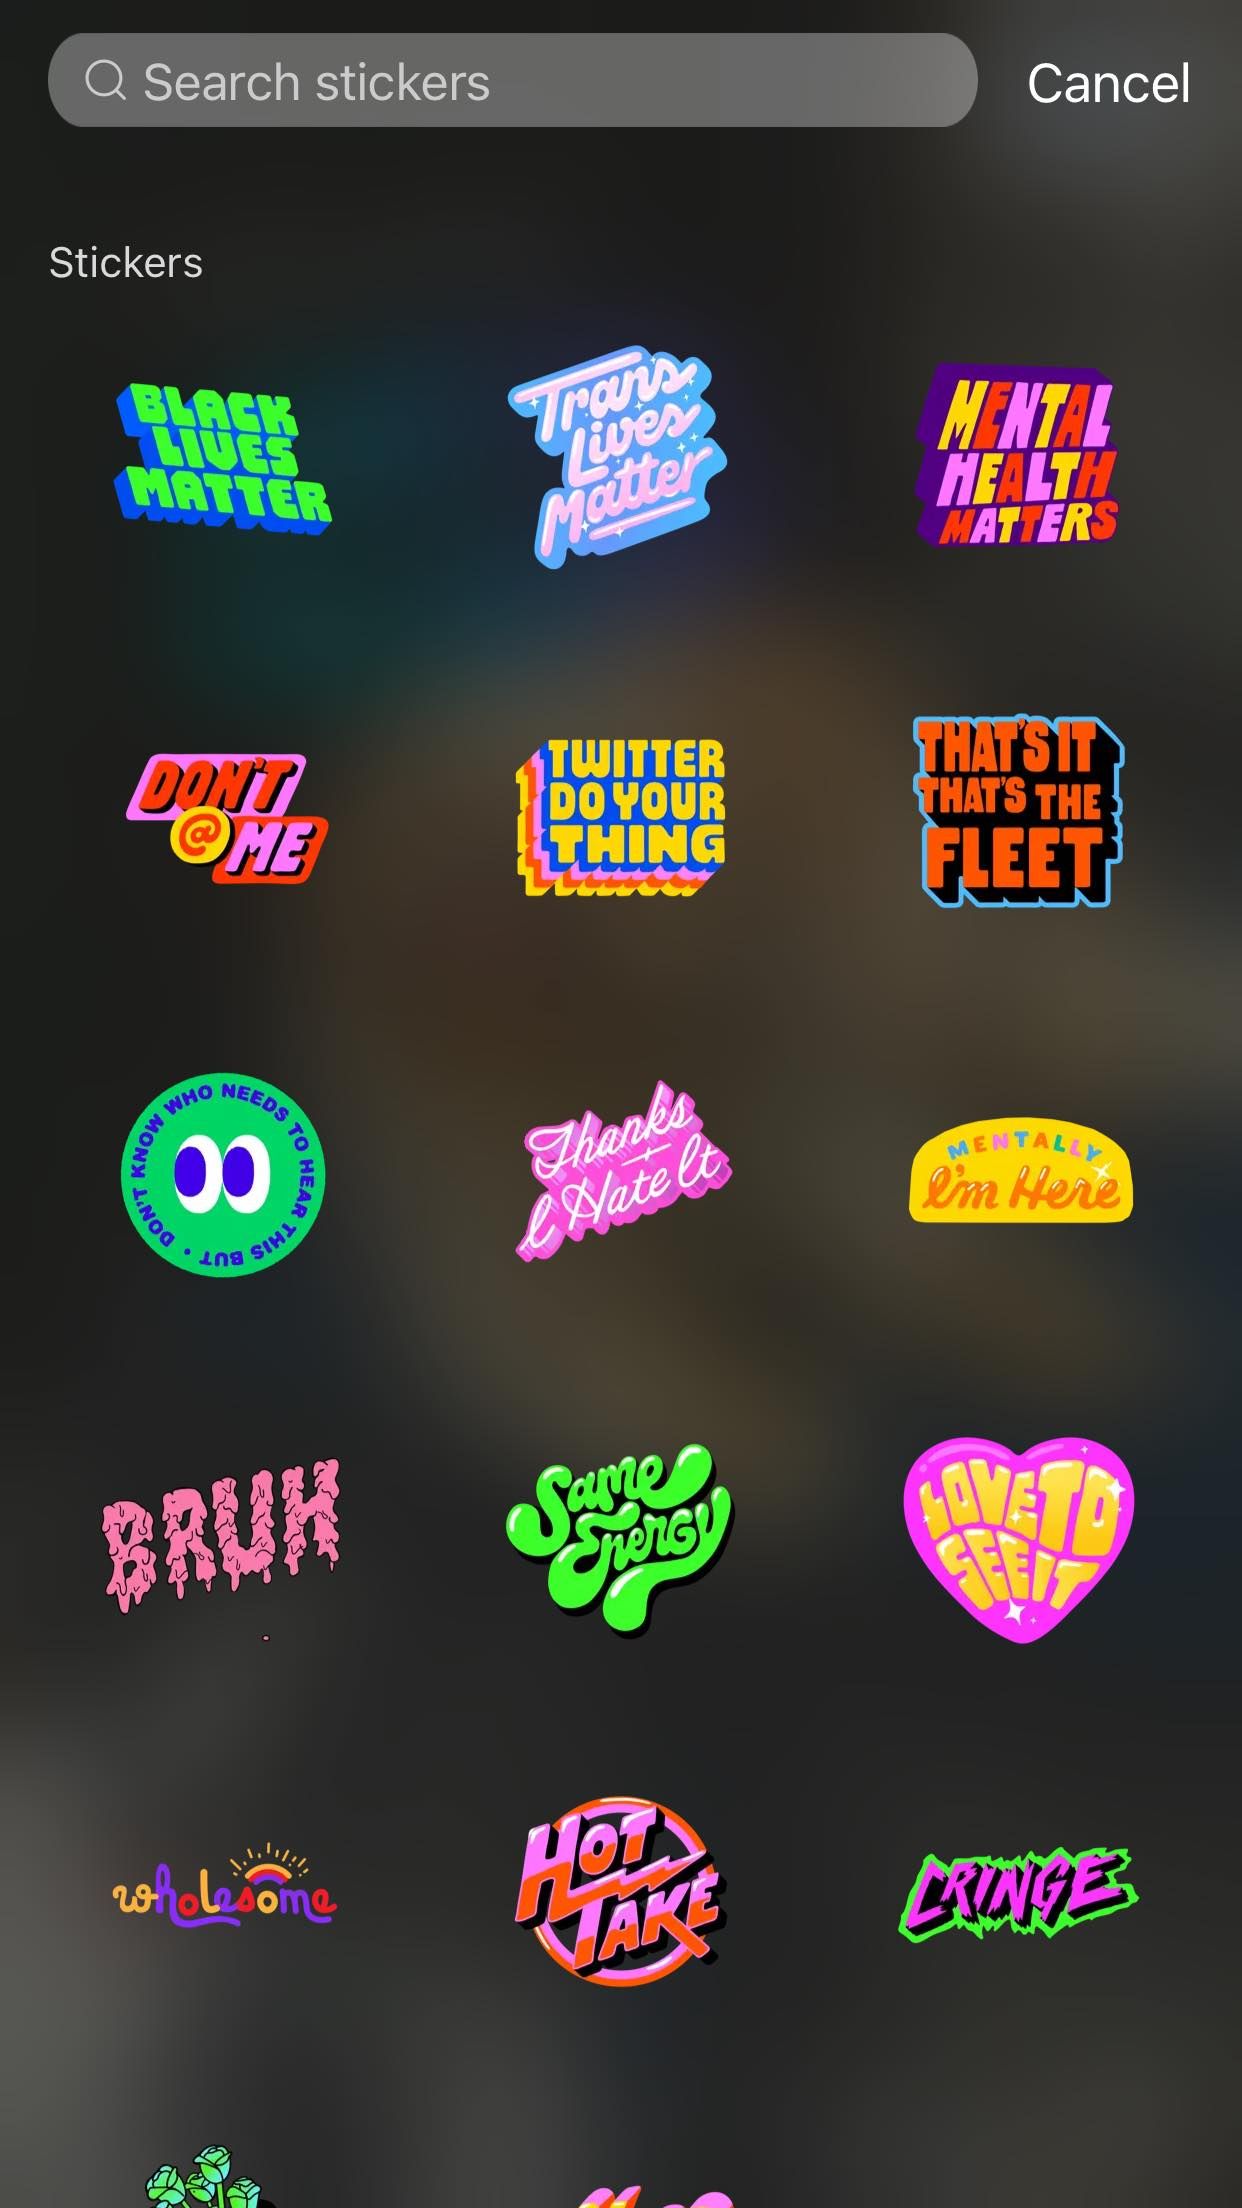 A screenshot of the stickers menu on Twitter Fleets